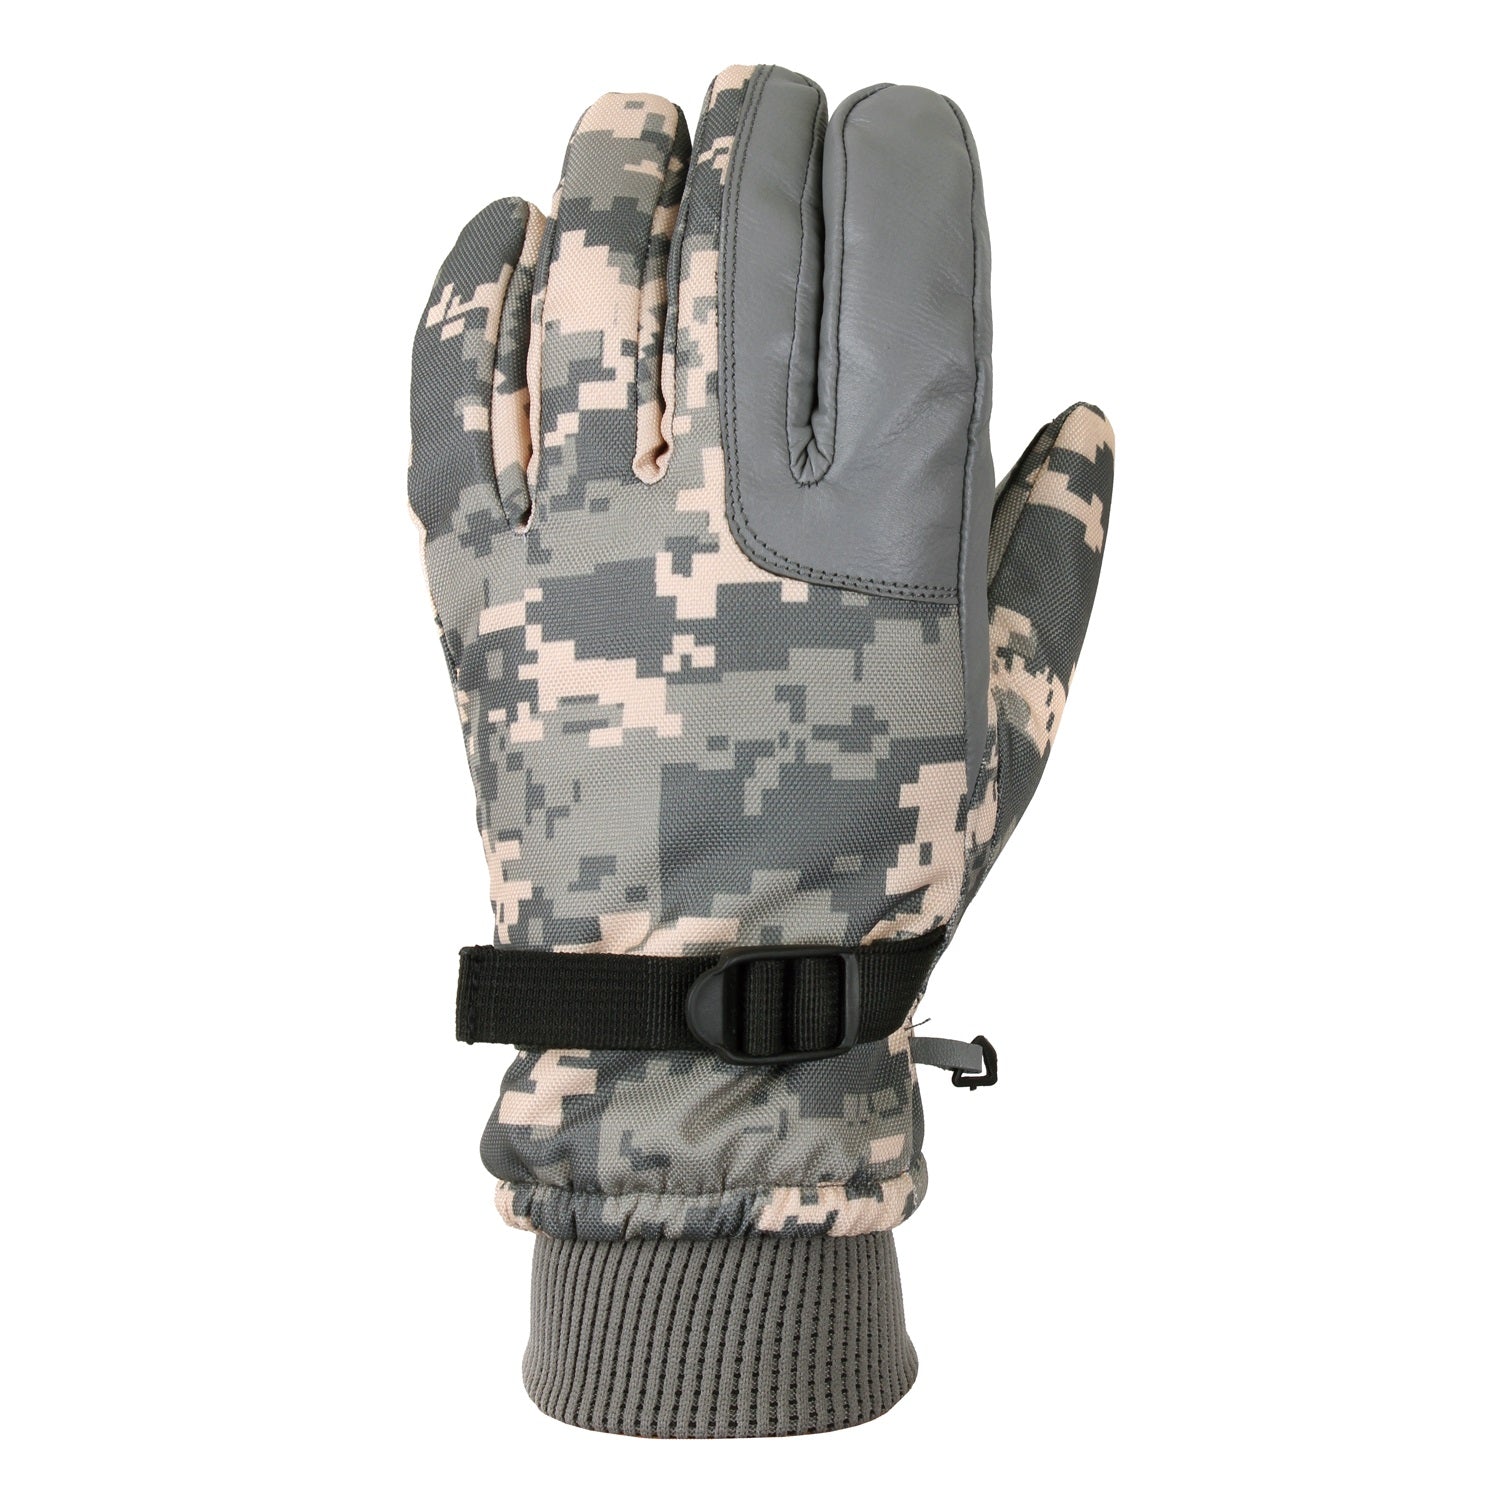 Rothco Cold Weather Military Gloves ACU Digital Camo